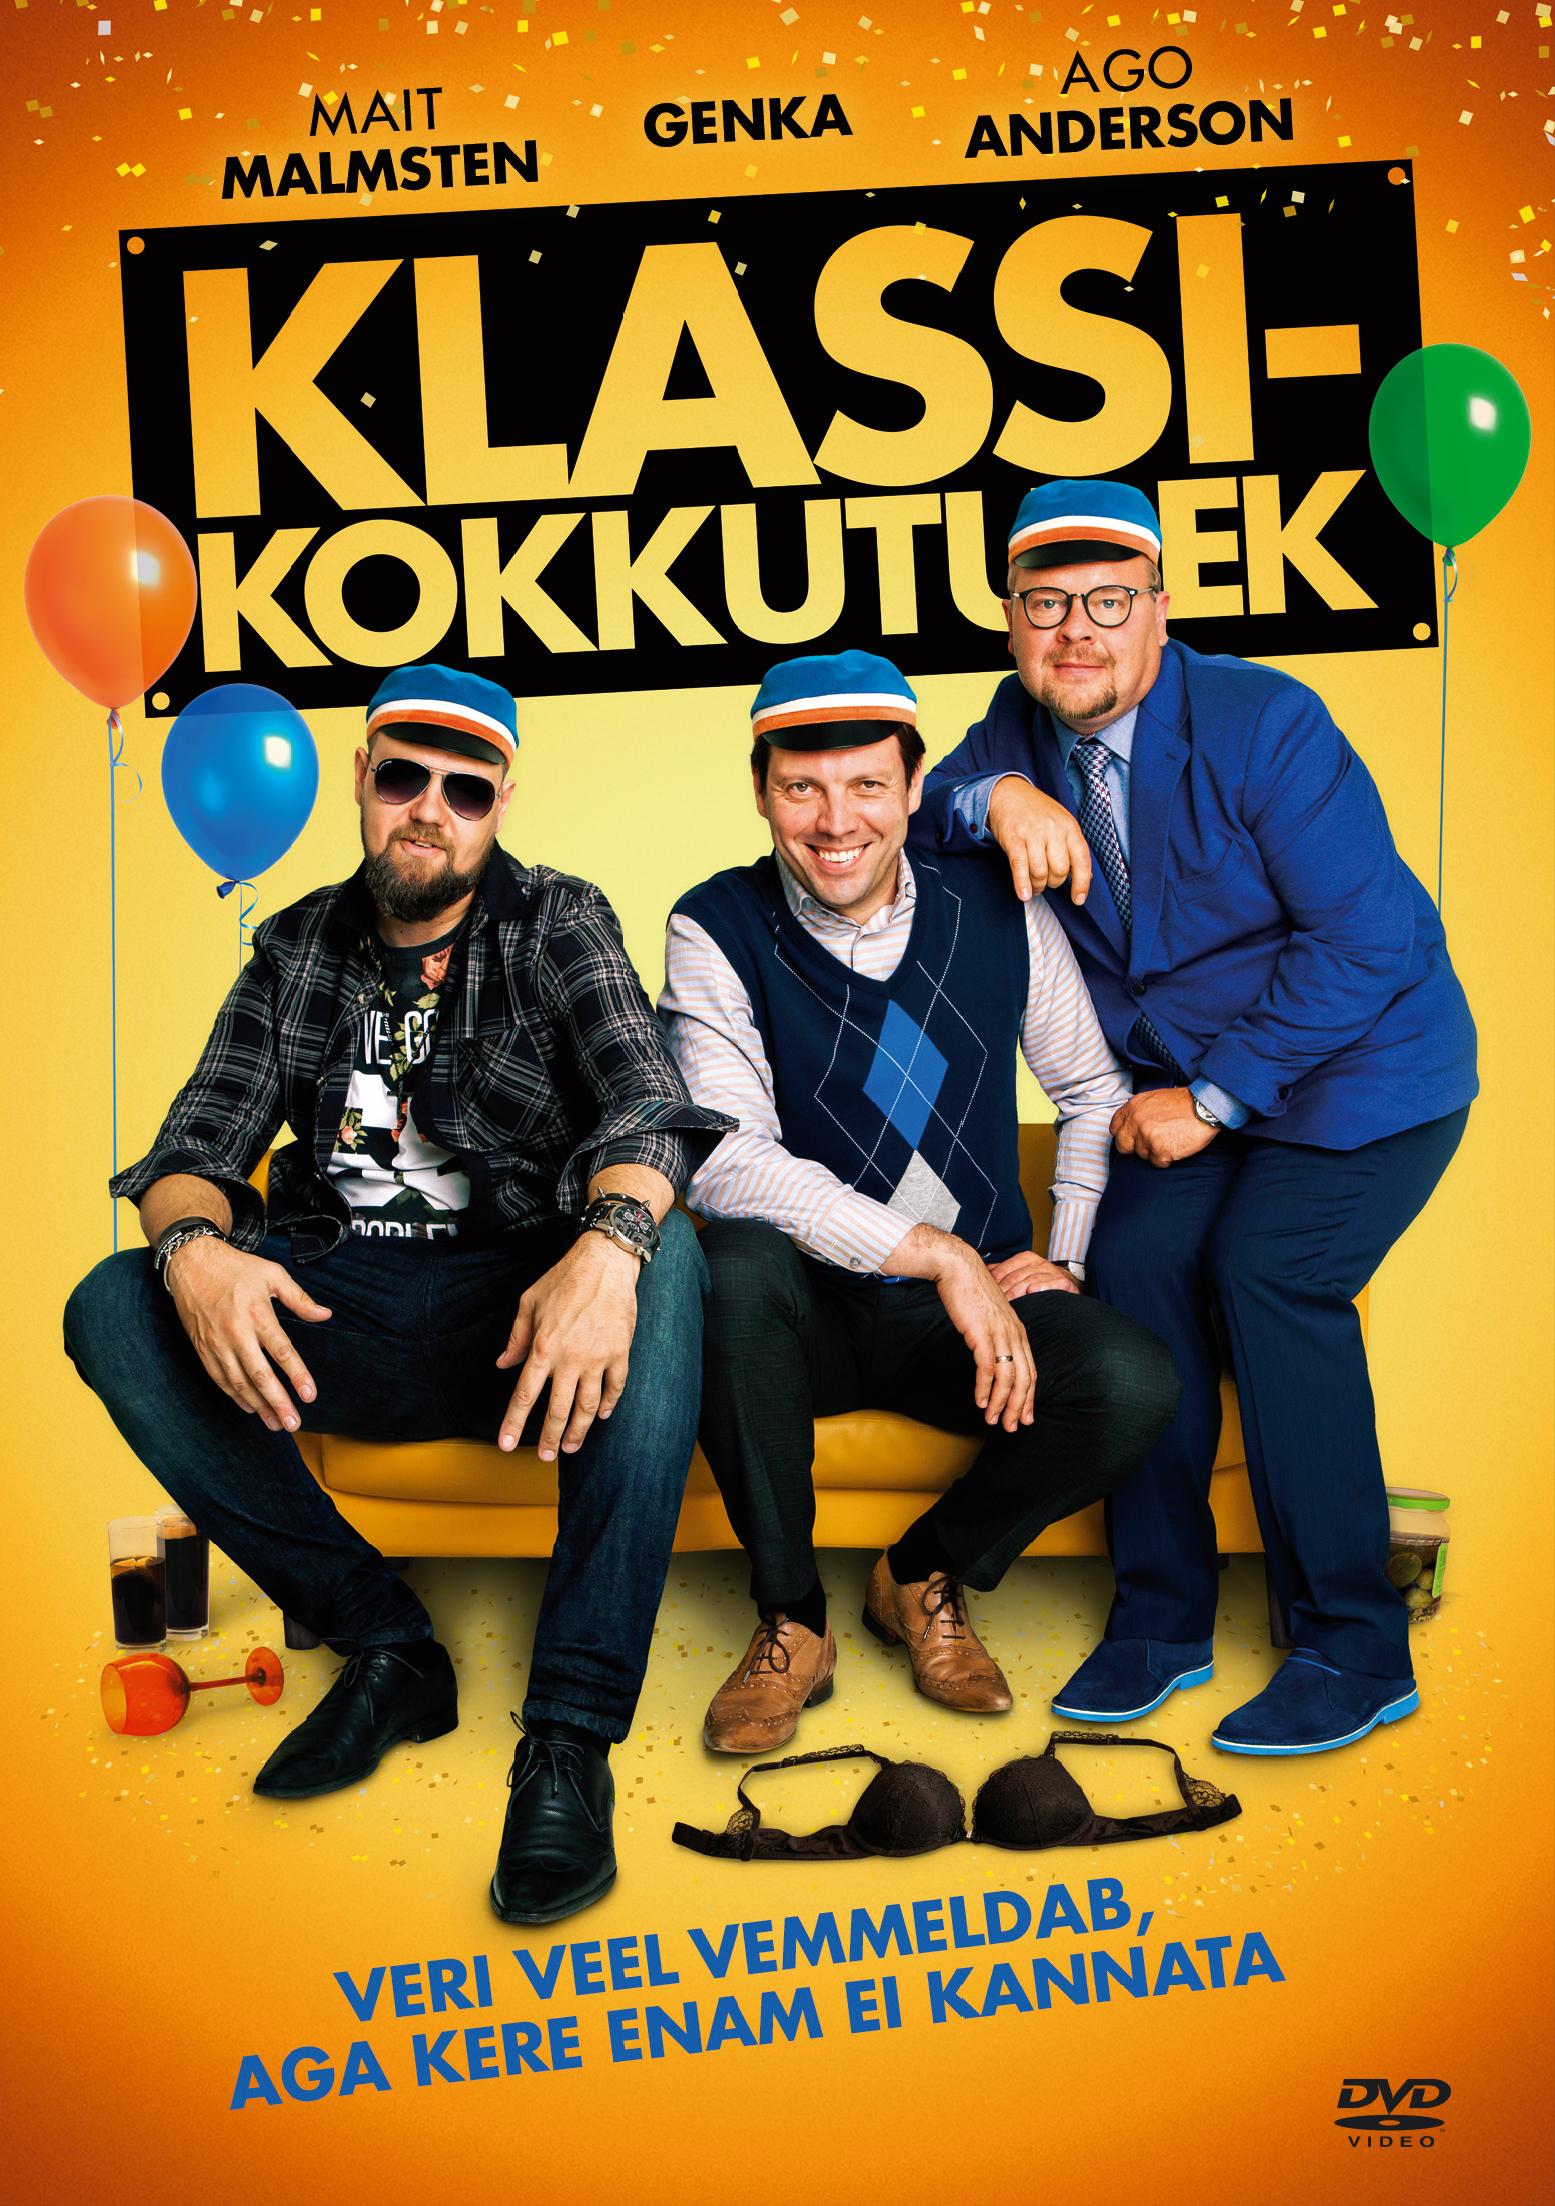 KLASSIKOKKUTULEK (2016) DVD